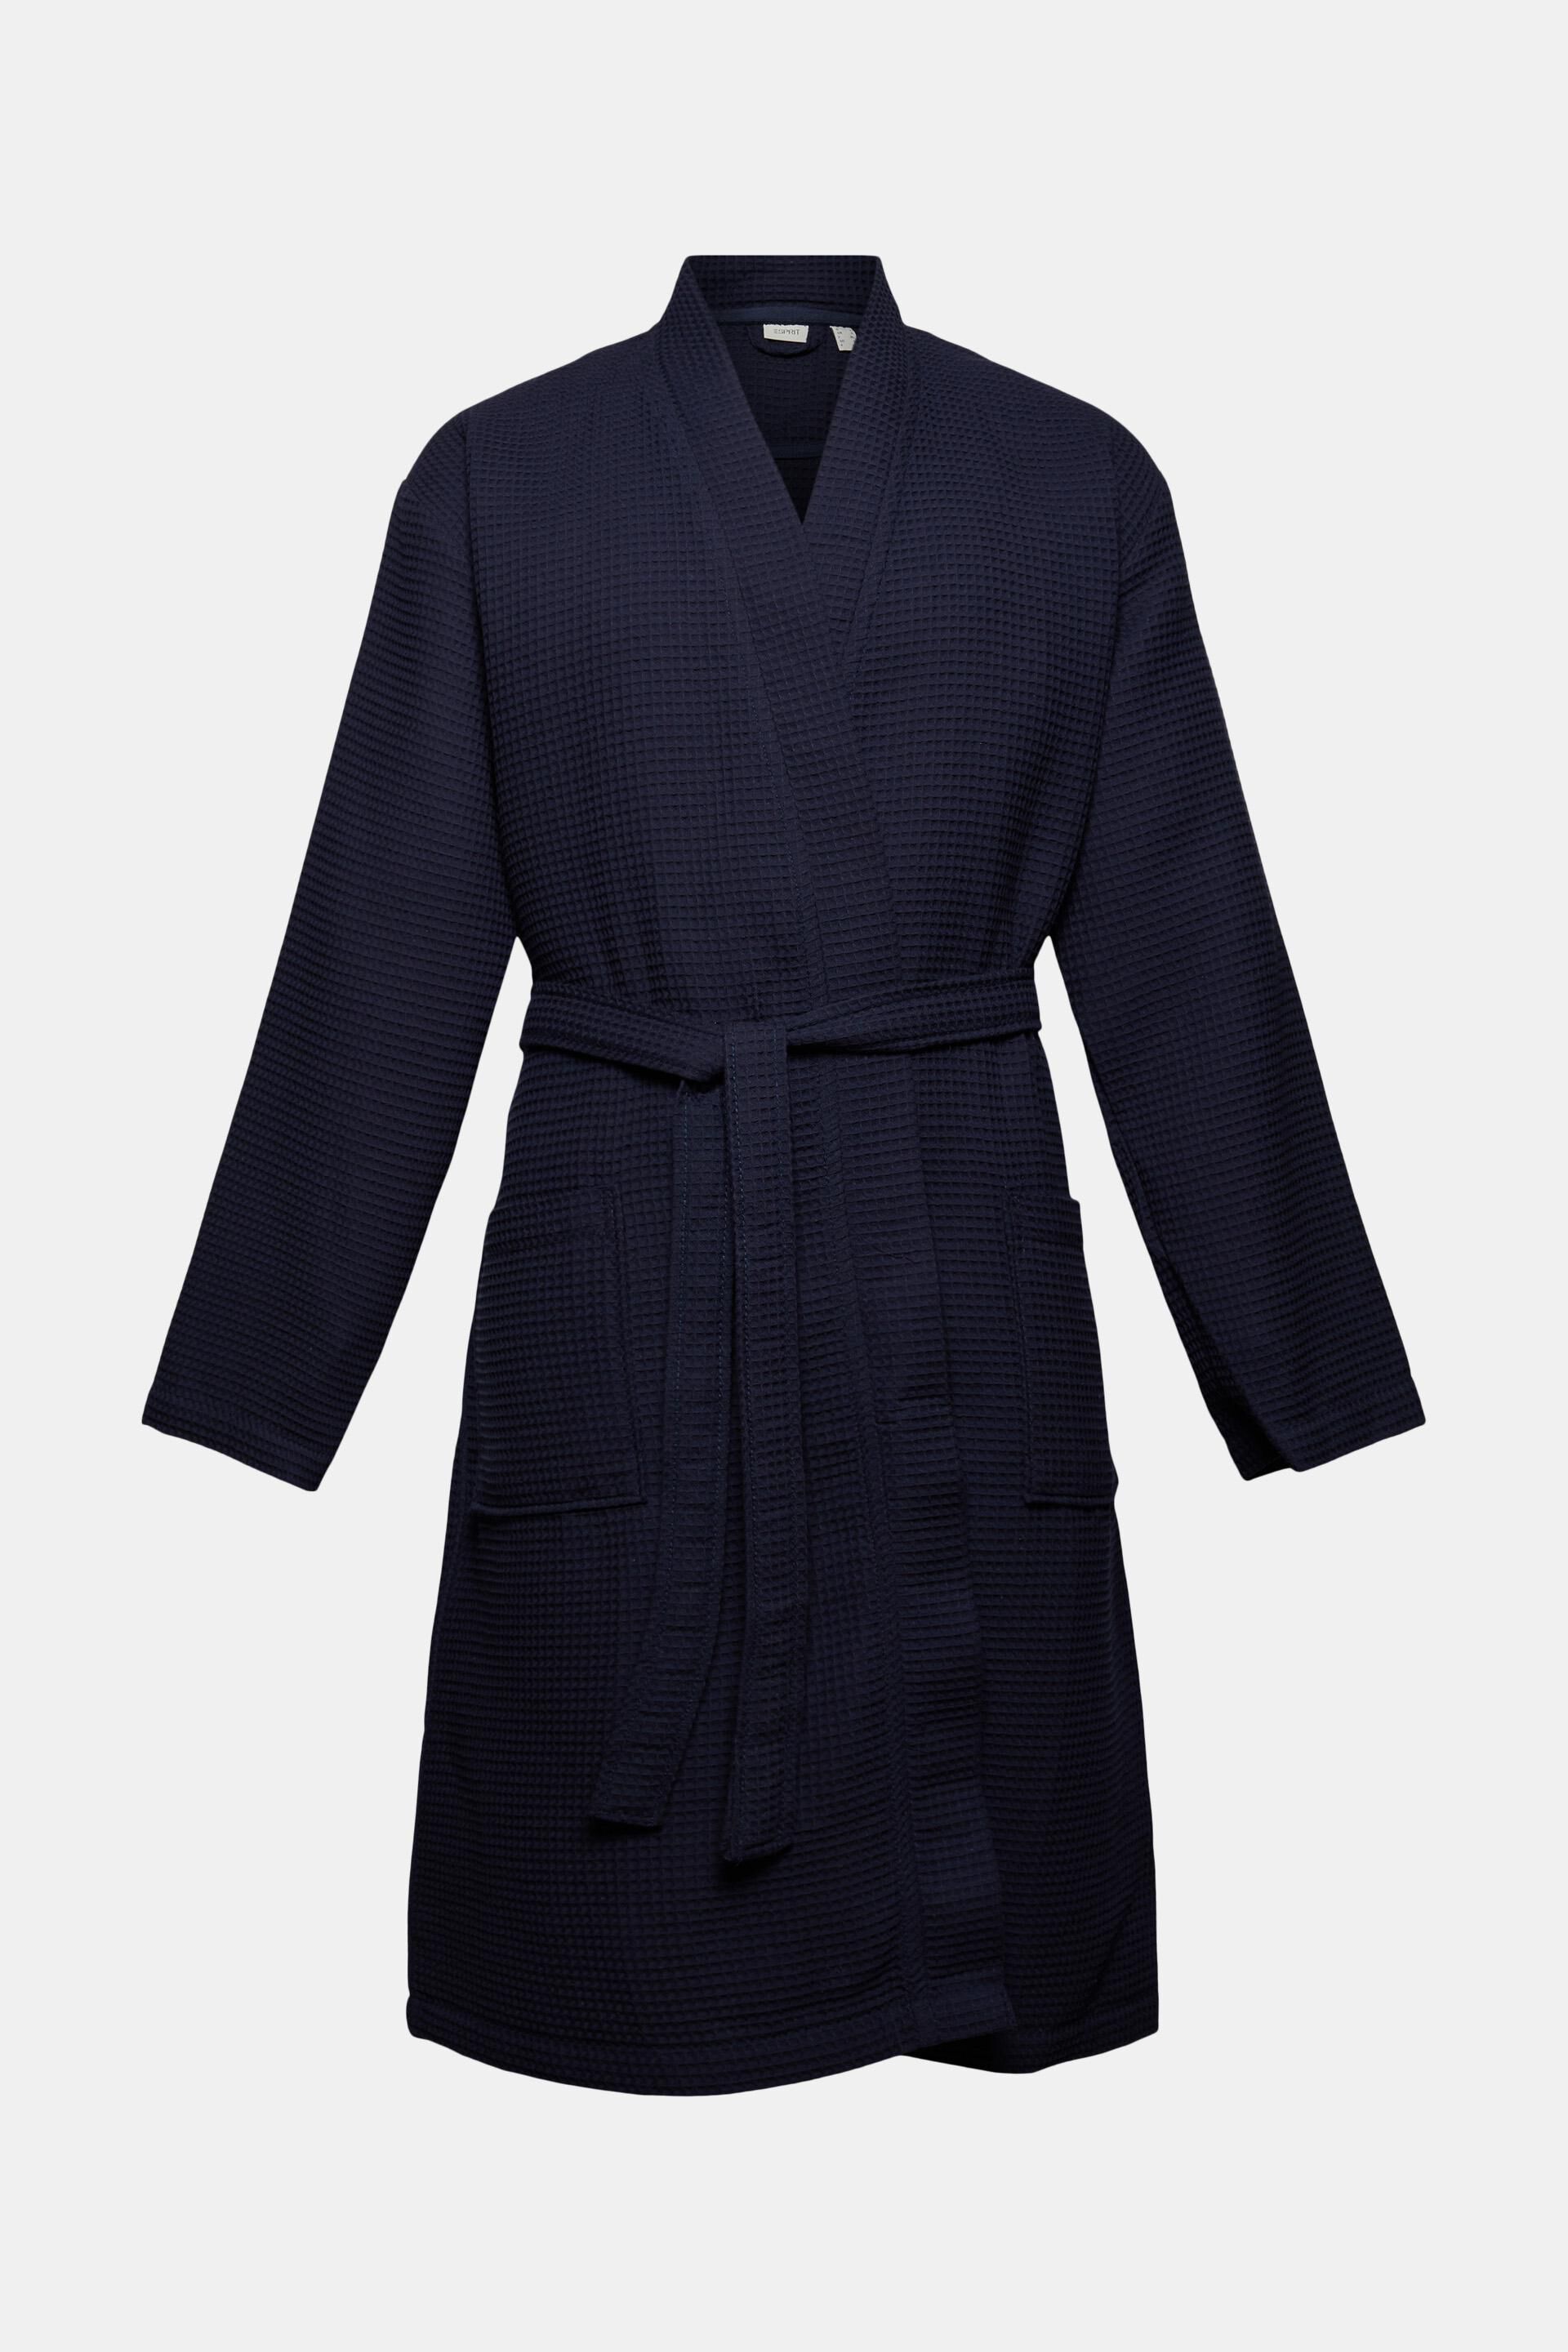 Esprit Online Shop Damen Men's bathrobe made of waffle piqué, cotton